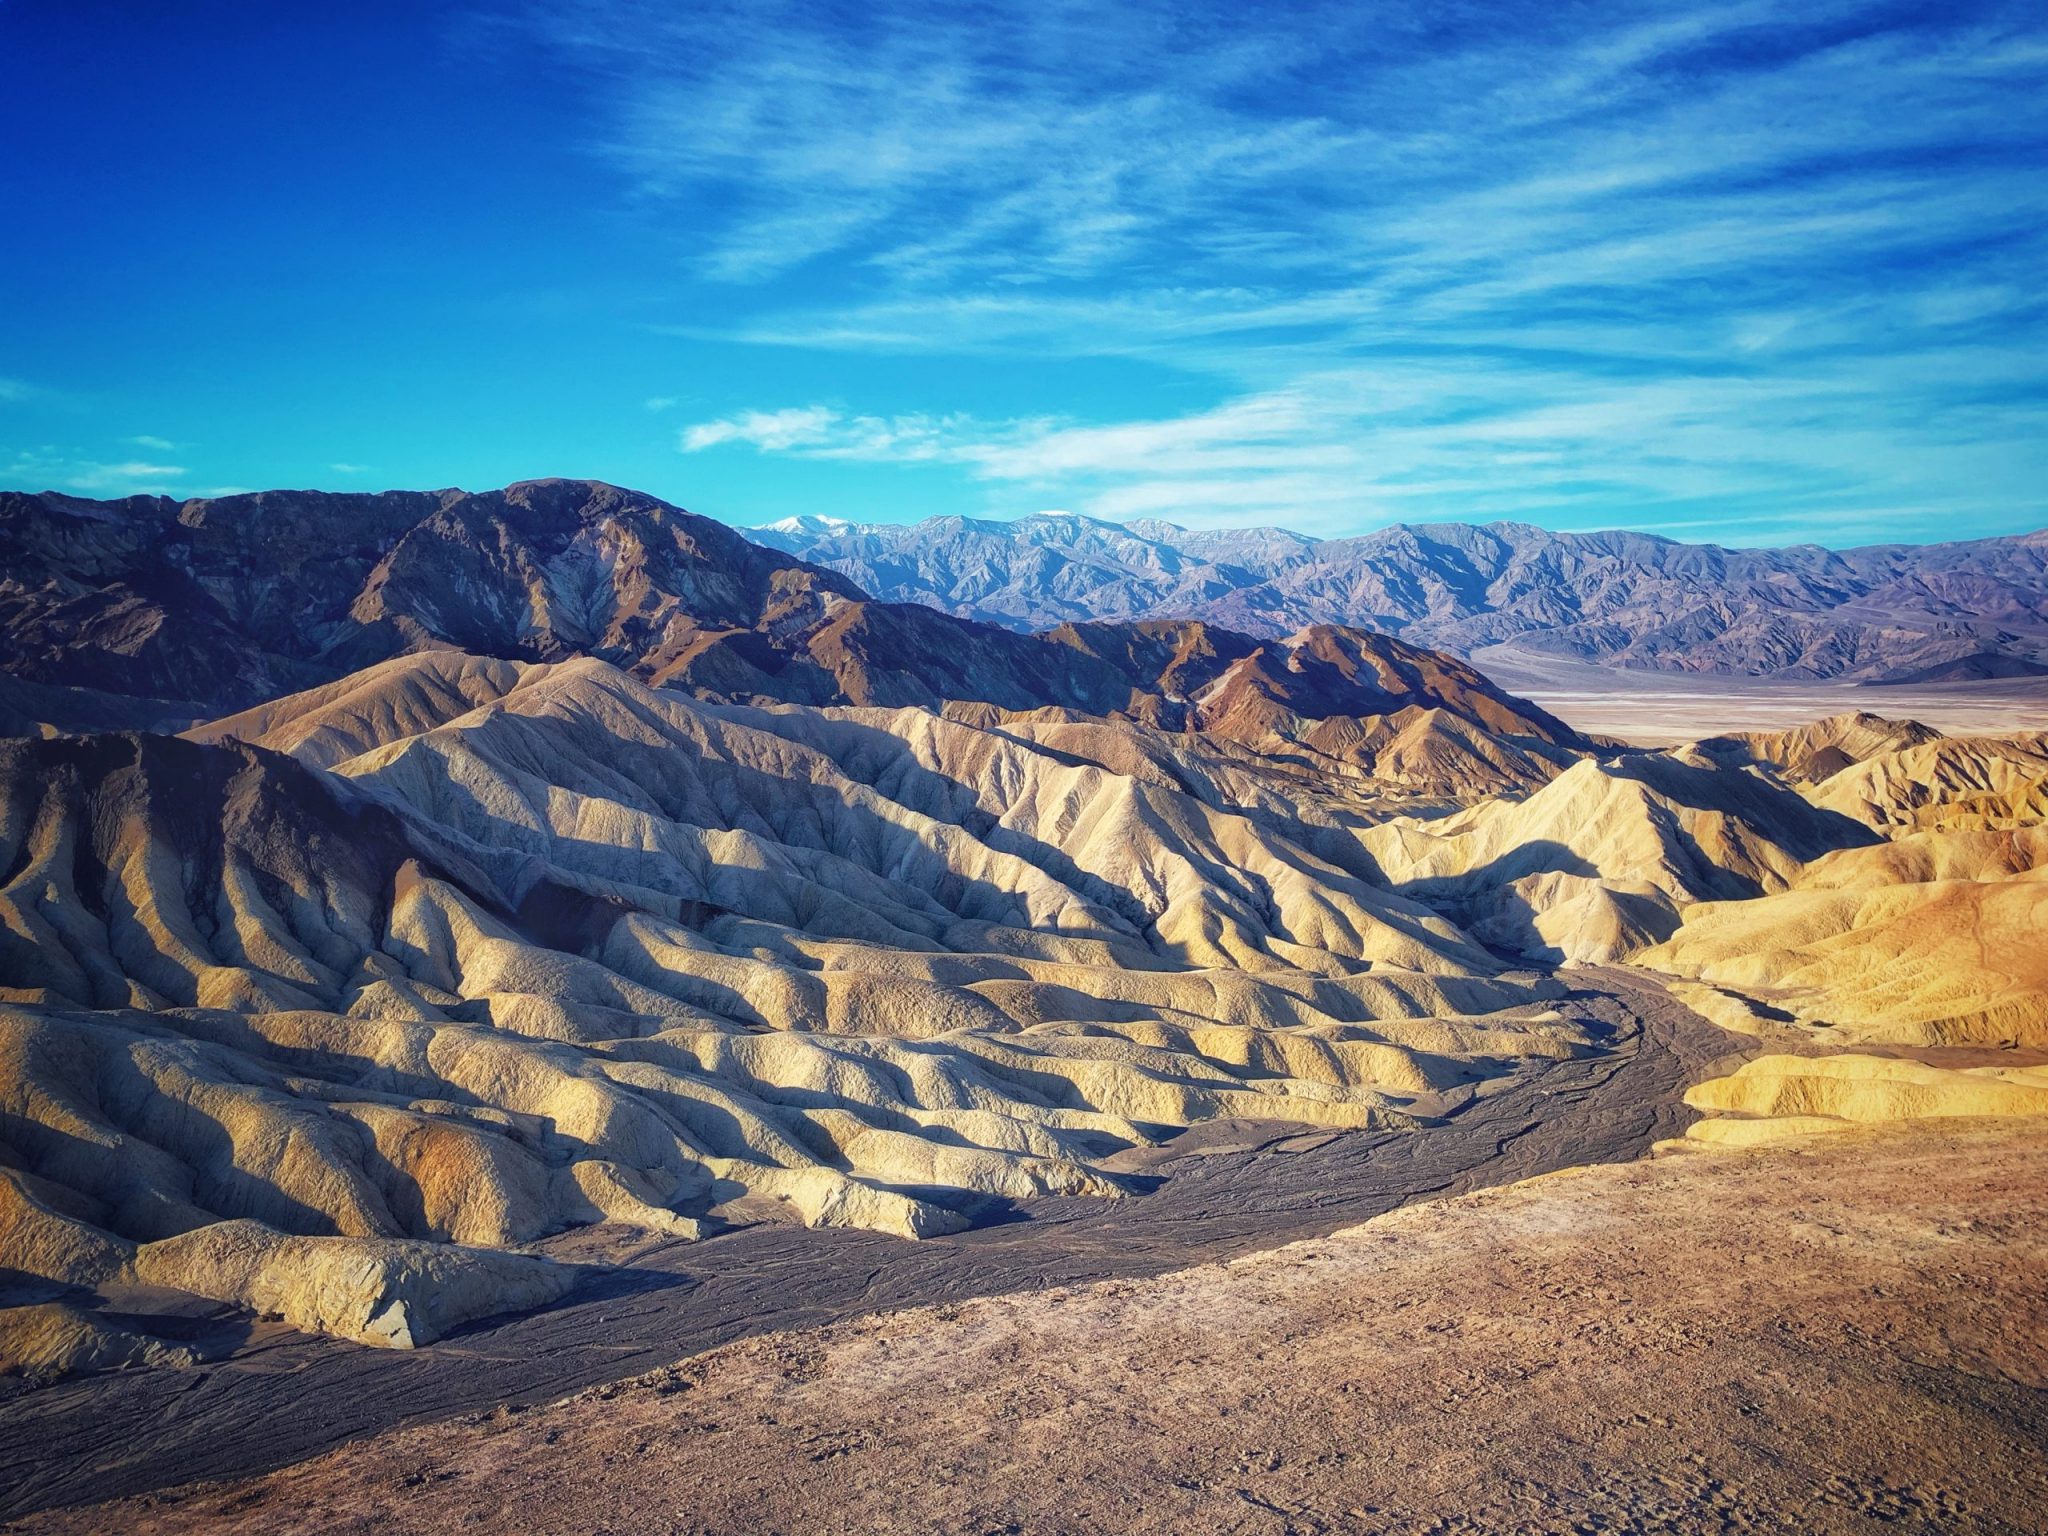 Incredible landscape at Zabriskie Point Death Valley